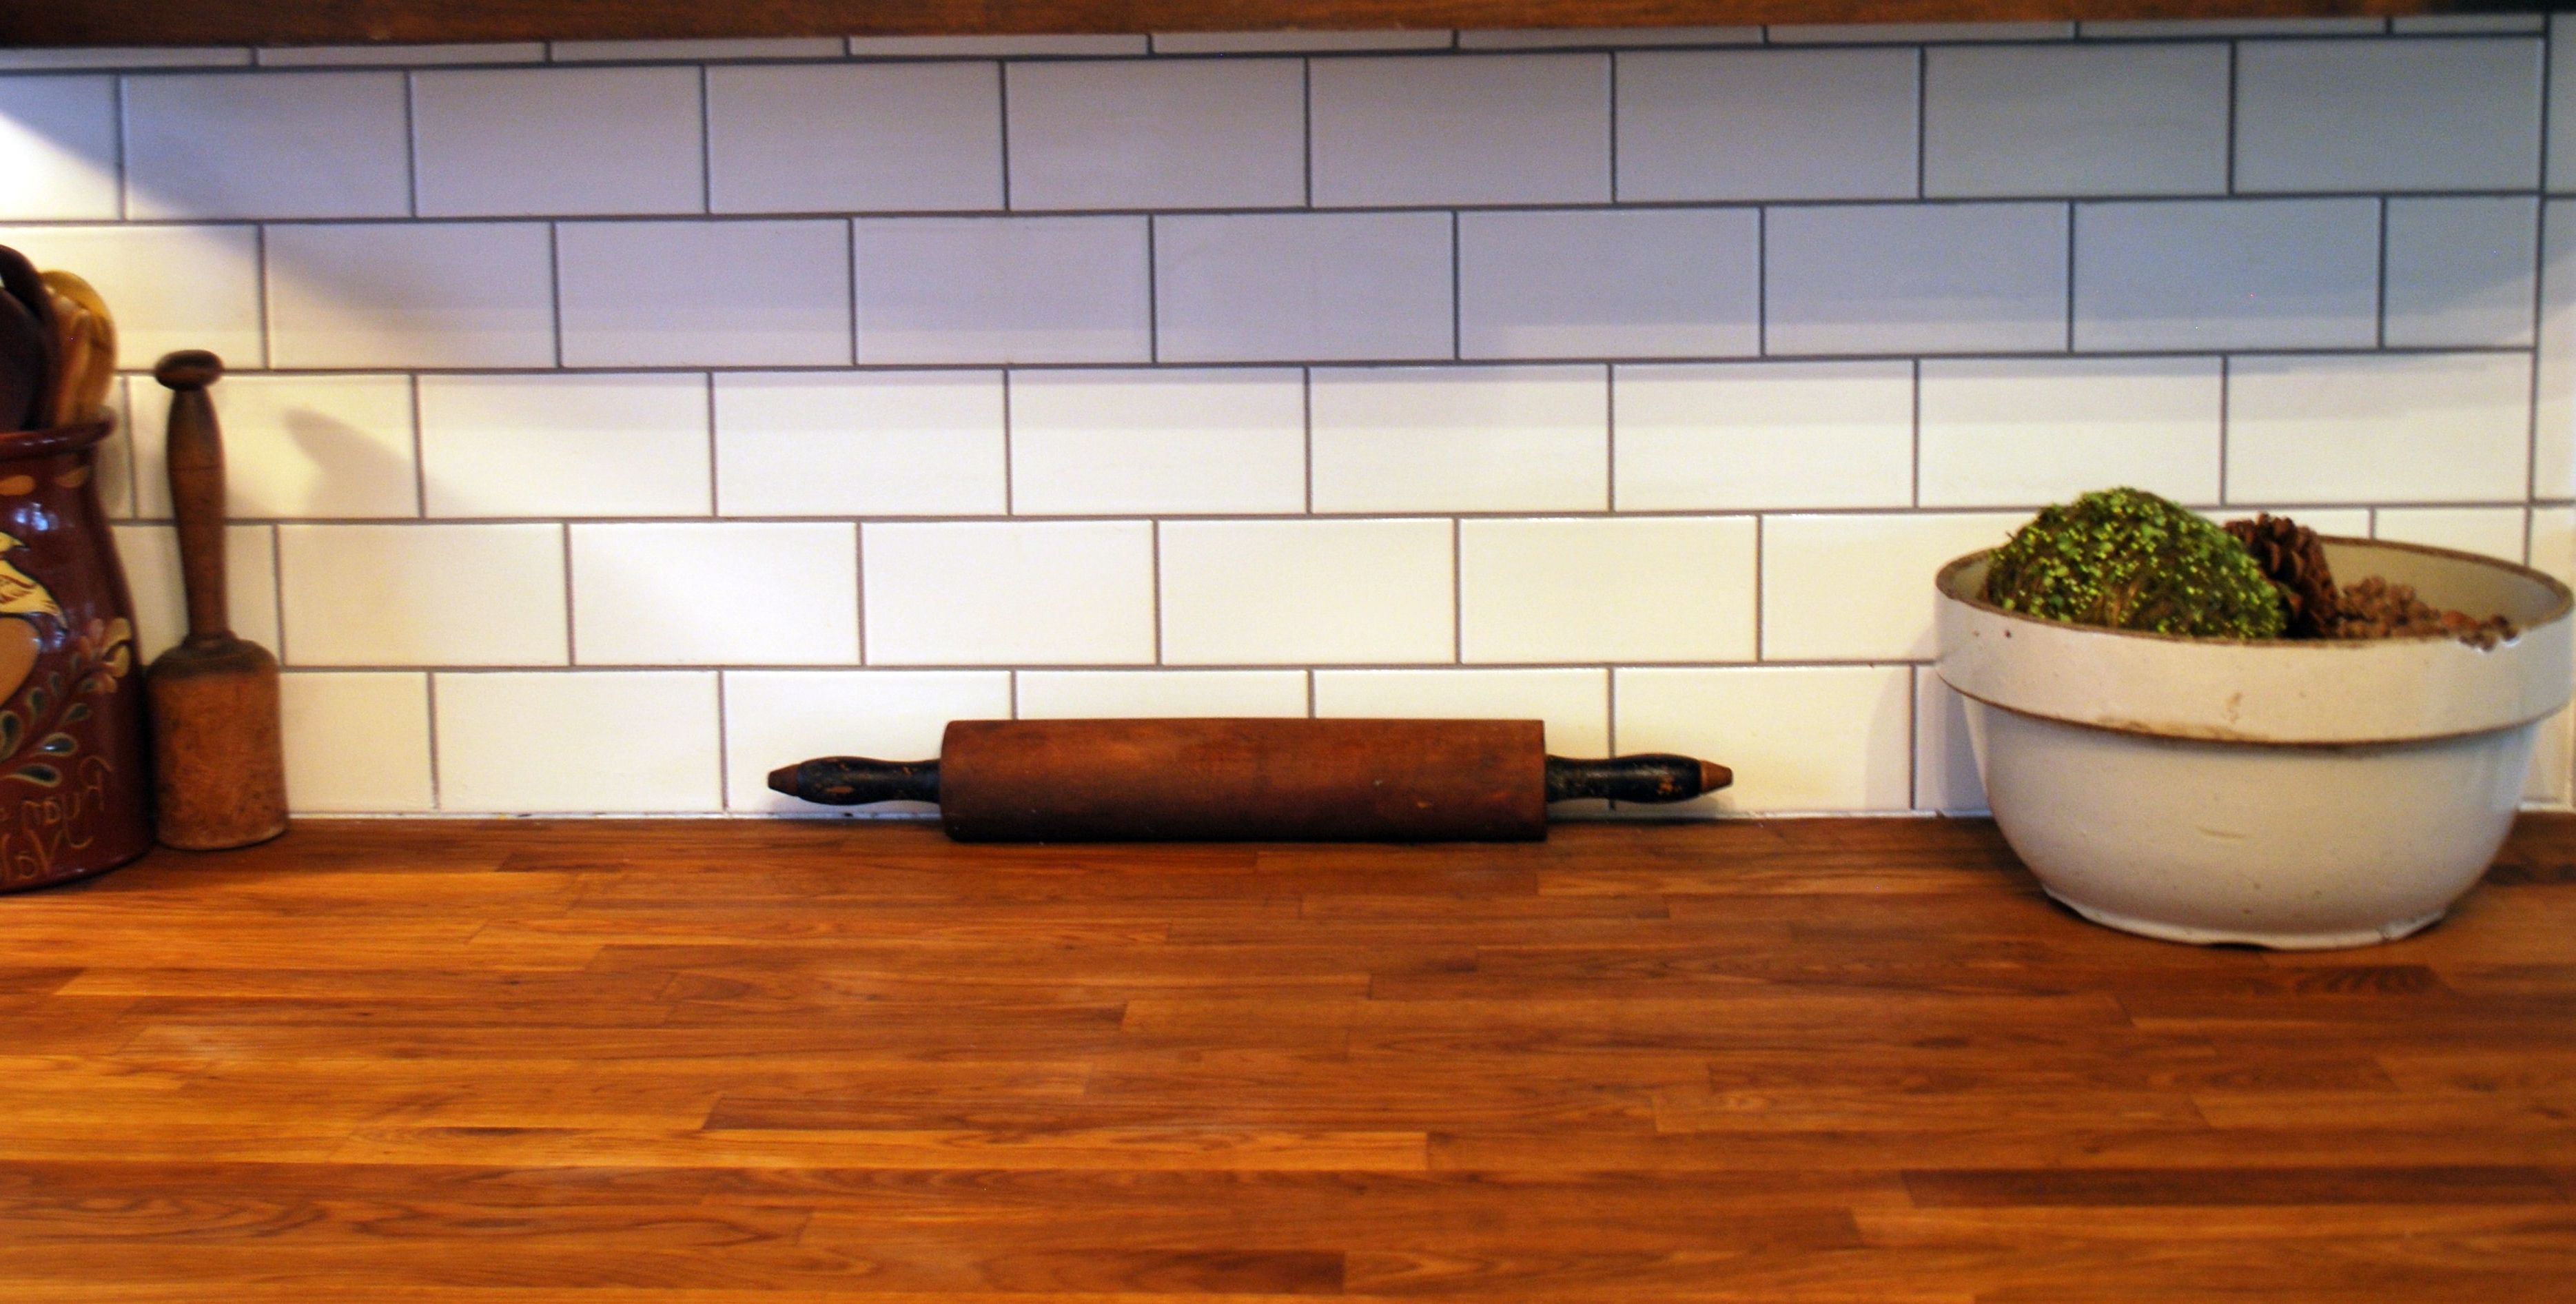 Kitchen Backsplash Tiles Subway Tile For Kitchen Decorations Ornament Ideas Designs Sizes Floor Patterns Mosaic Backsplashes Progress Subway Tile Floor Floors Backsplashes Designs (View 10 of 38)